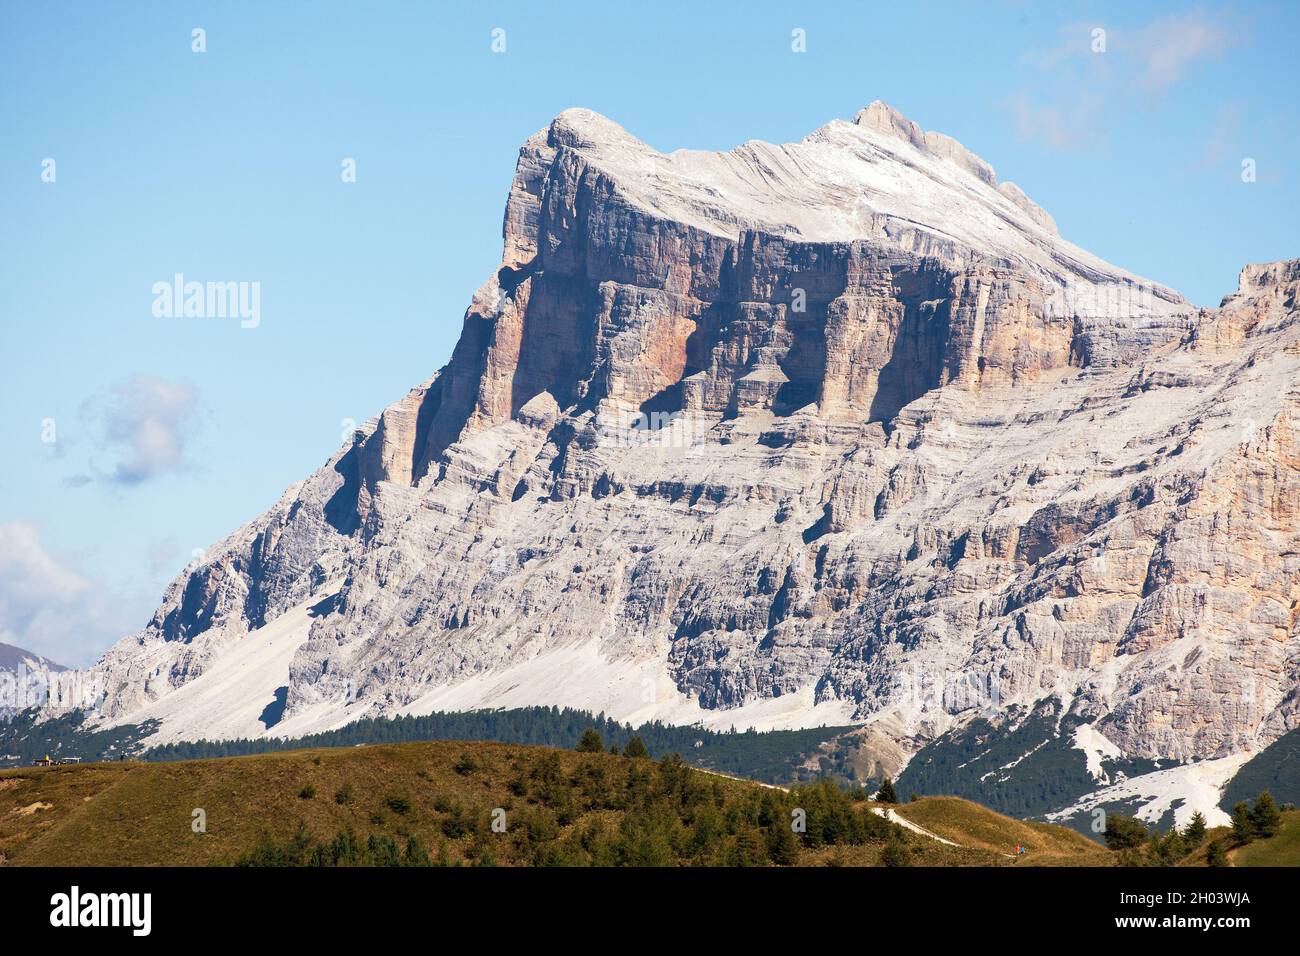 Kreuzkofel Gruppe, view of mount Heiligkreuzkofel and Zehnerspitze or Cima Dieci, South Tirol, Dolomites mountains, Italy Stock Photo